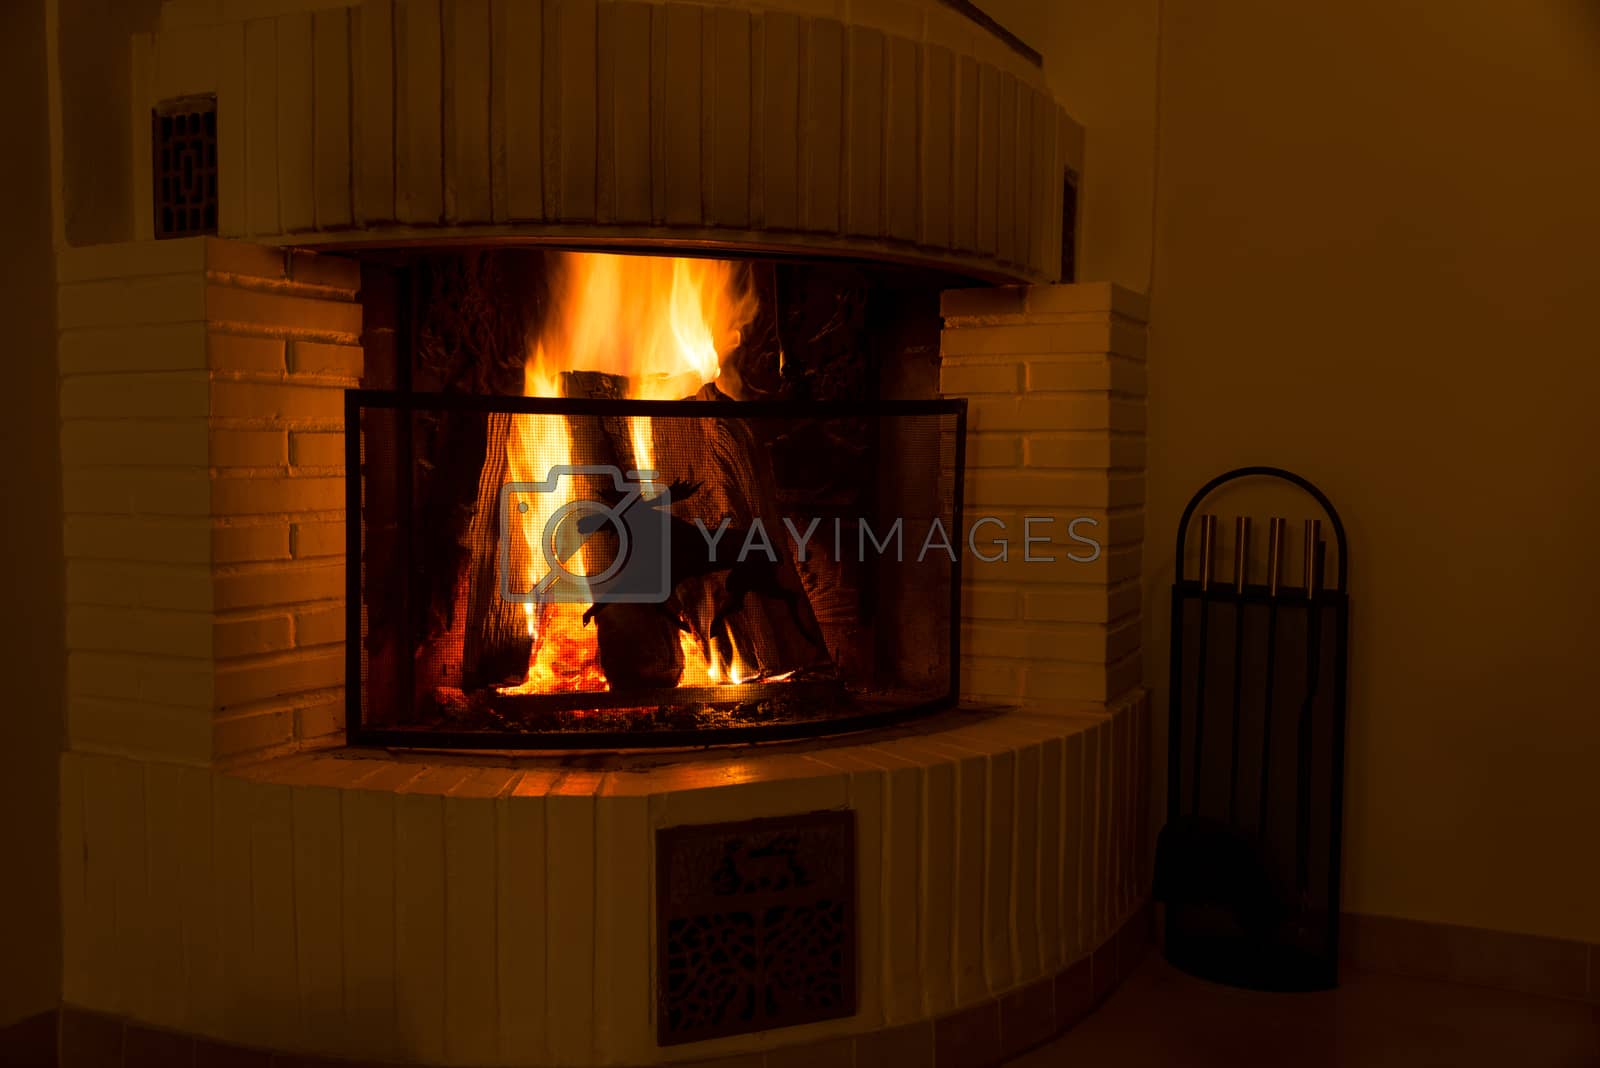 Royalty free image of fireplace with burning logs by Nanisimova